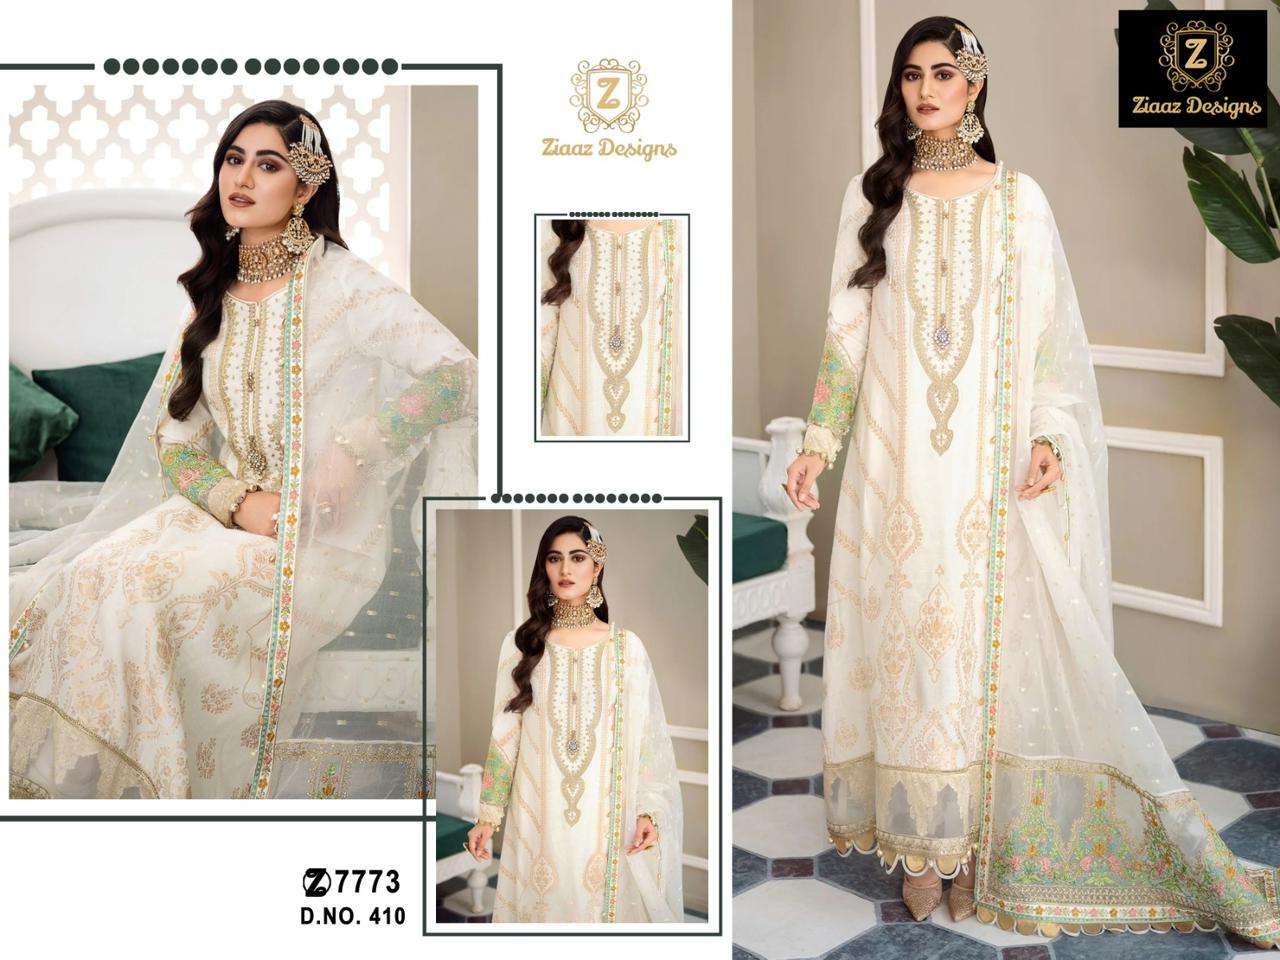 Ziaaz Designs 410 Fancy Designer Pakistani Embroidered Salwar Suit Collection 